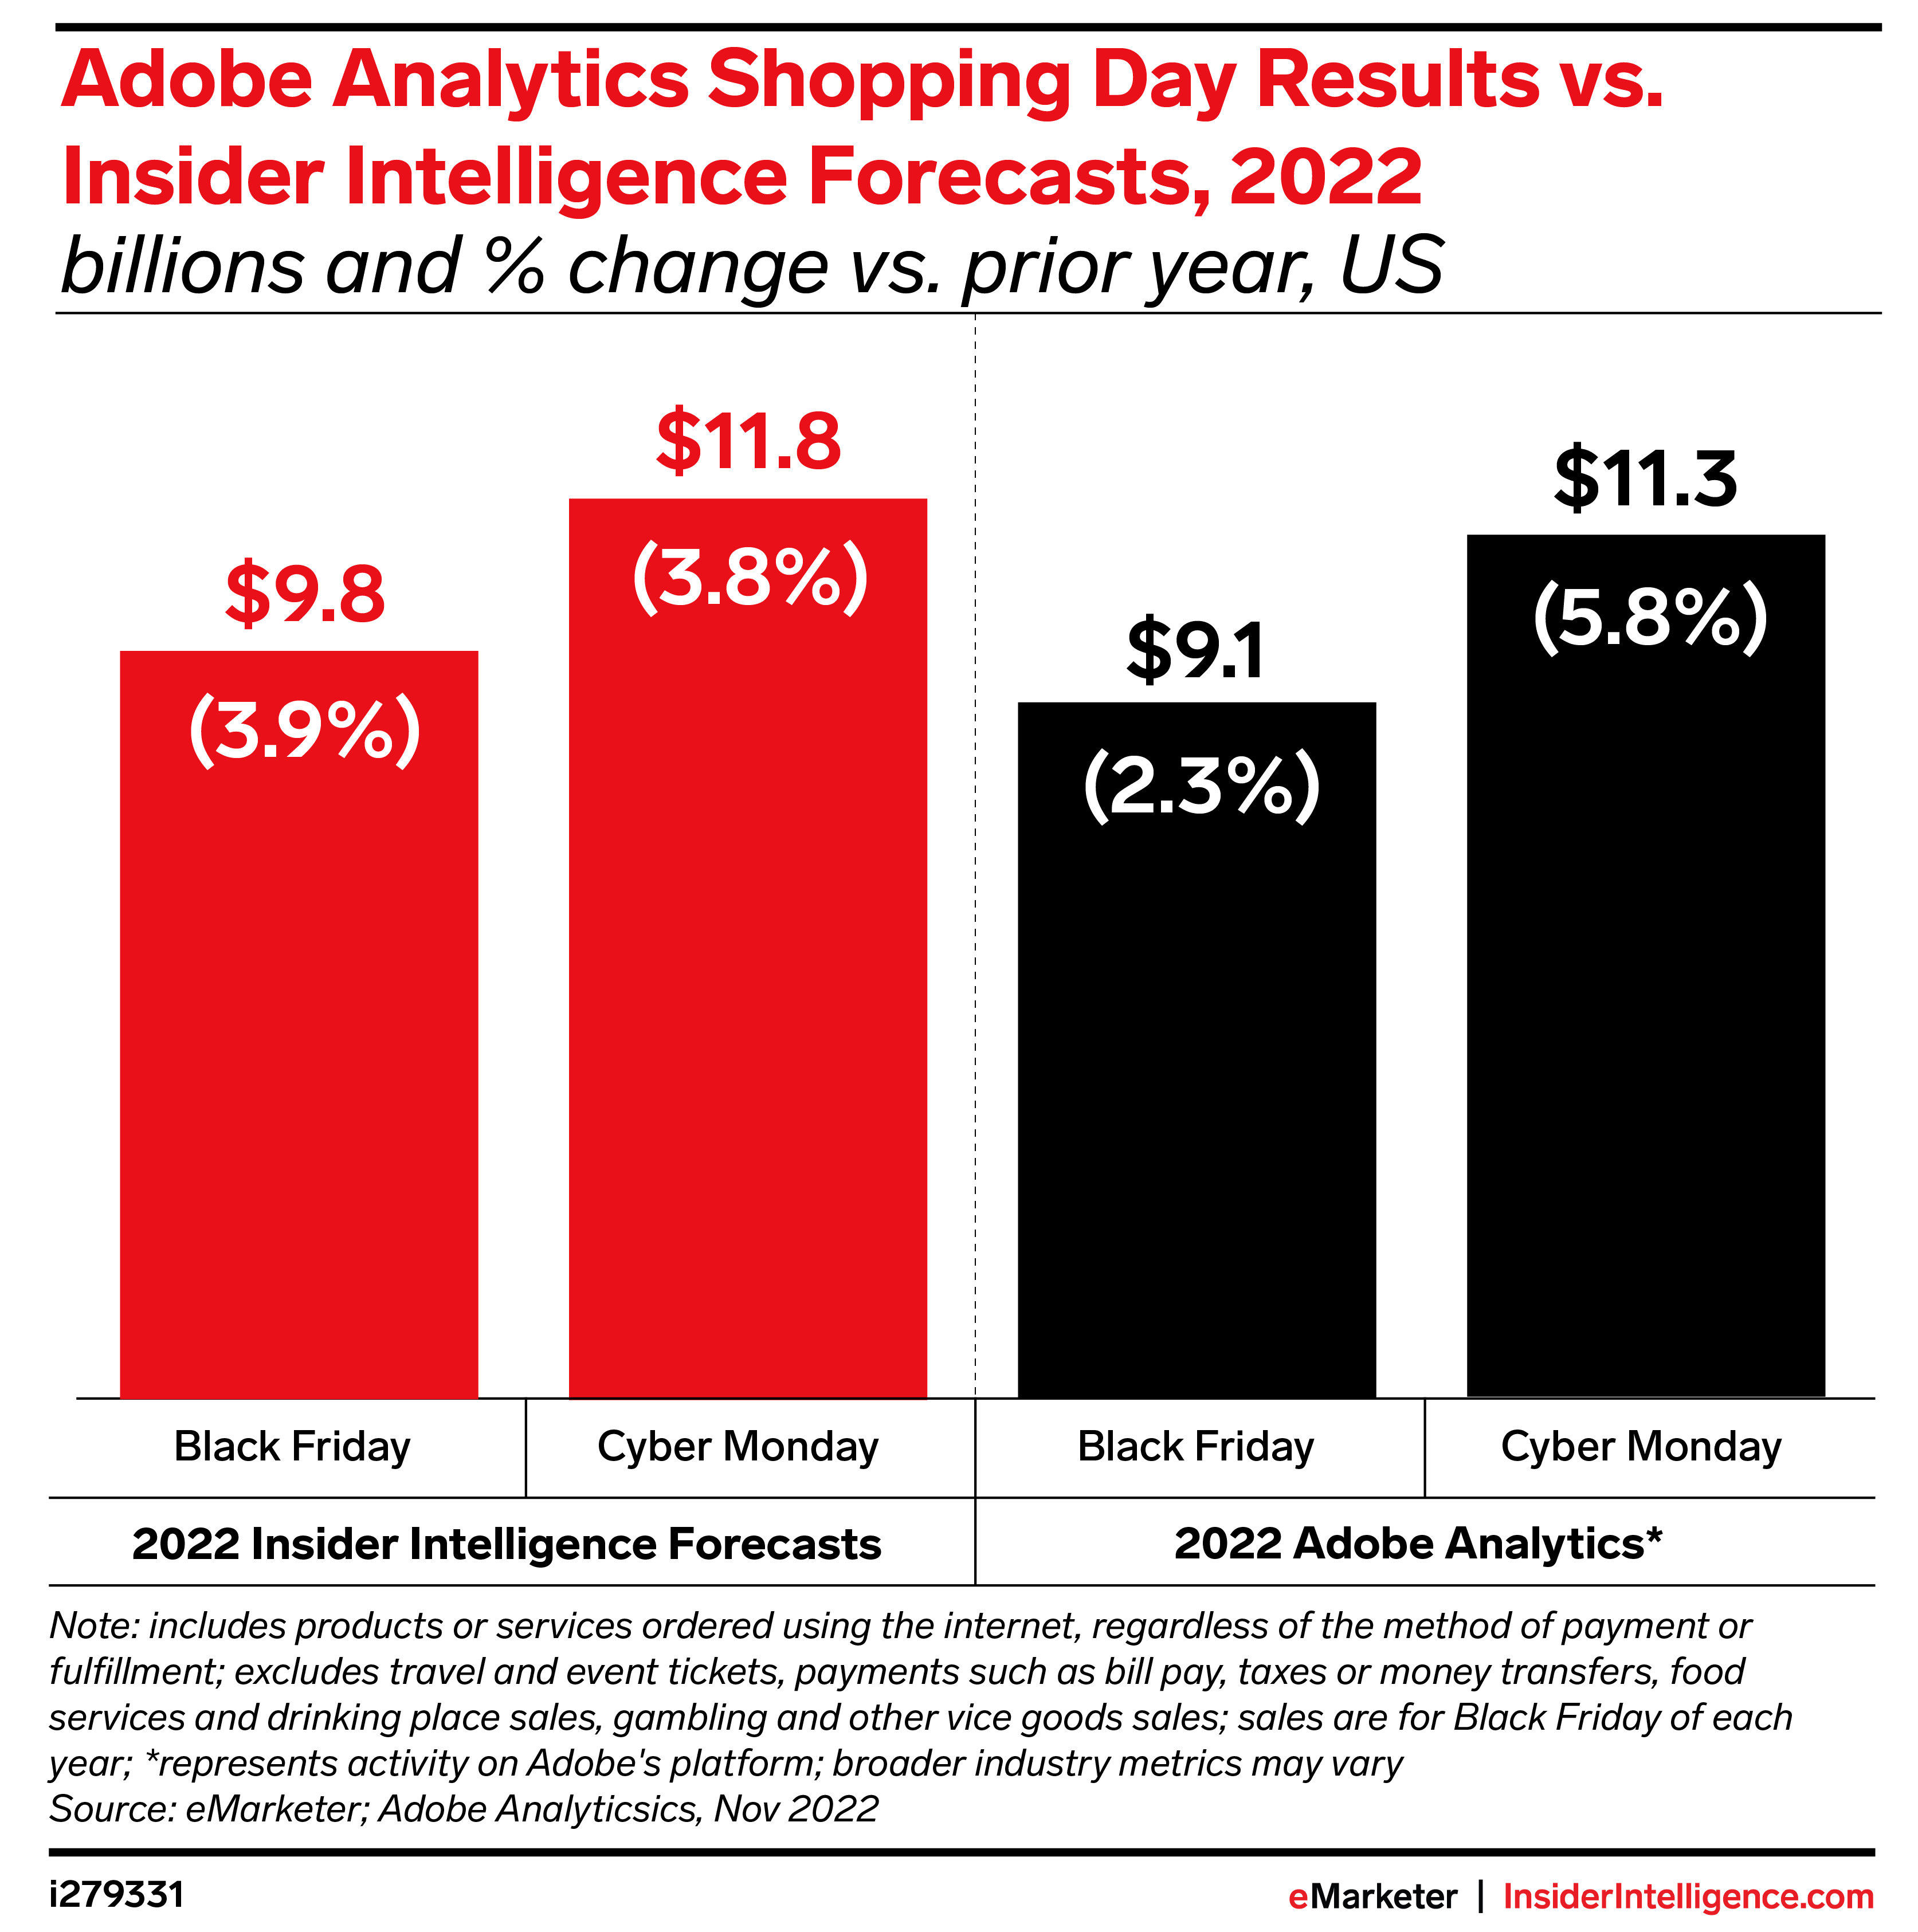 Adobe Analytics Holiday Shopping Day Results vs. Insider Intelligence Forecasts, 2022 (billions and % change vs. prior year, US)